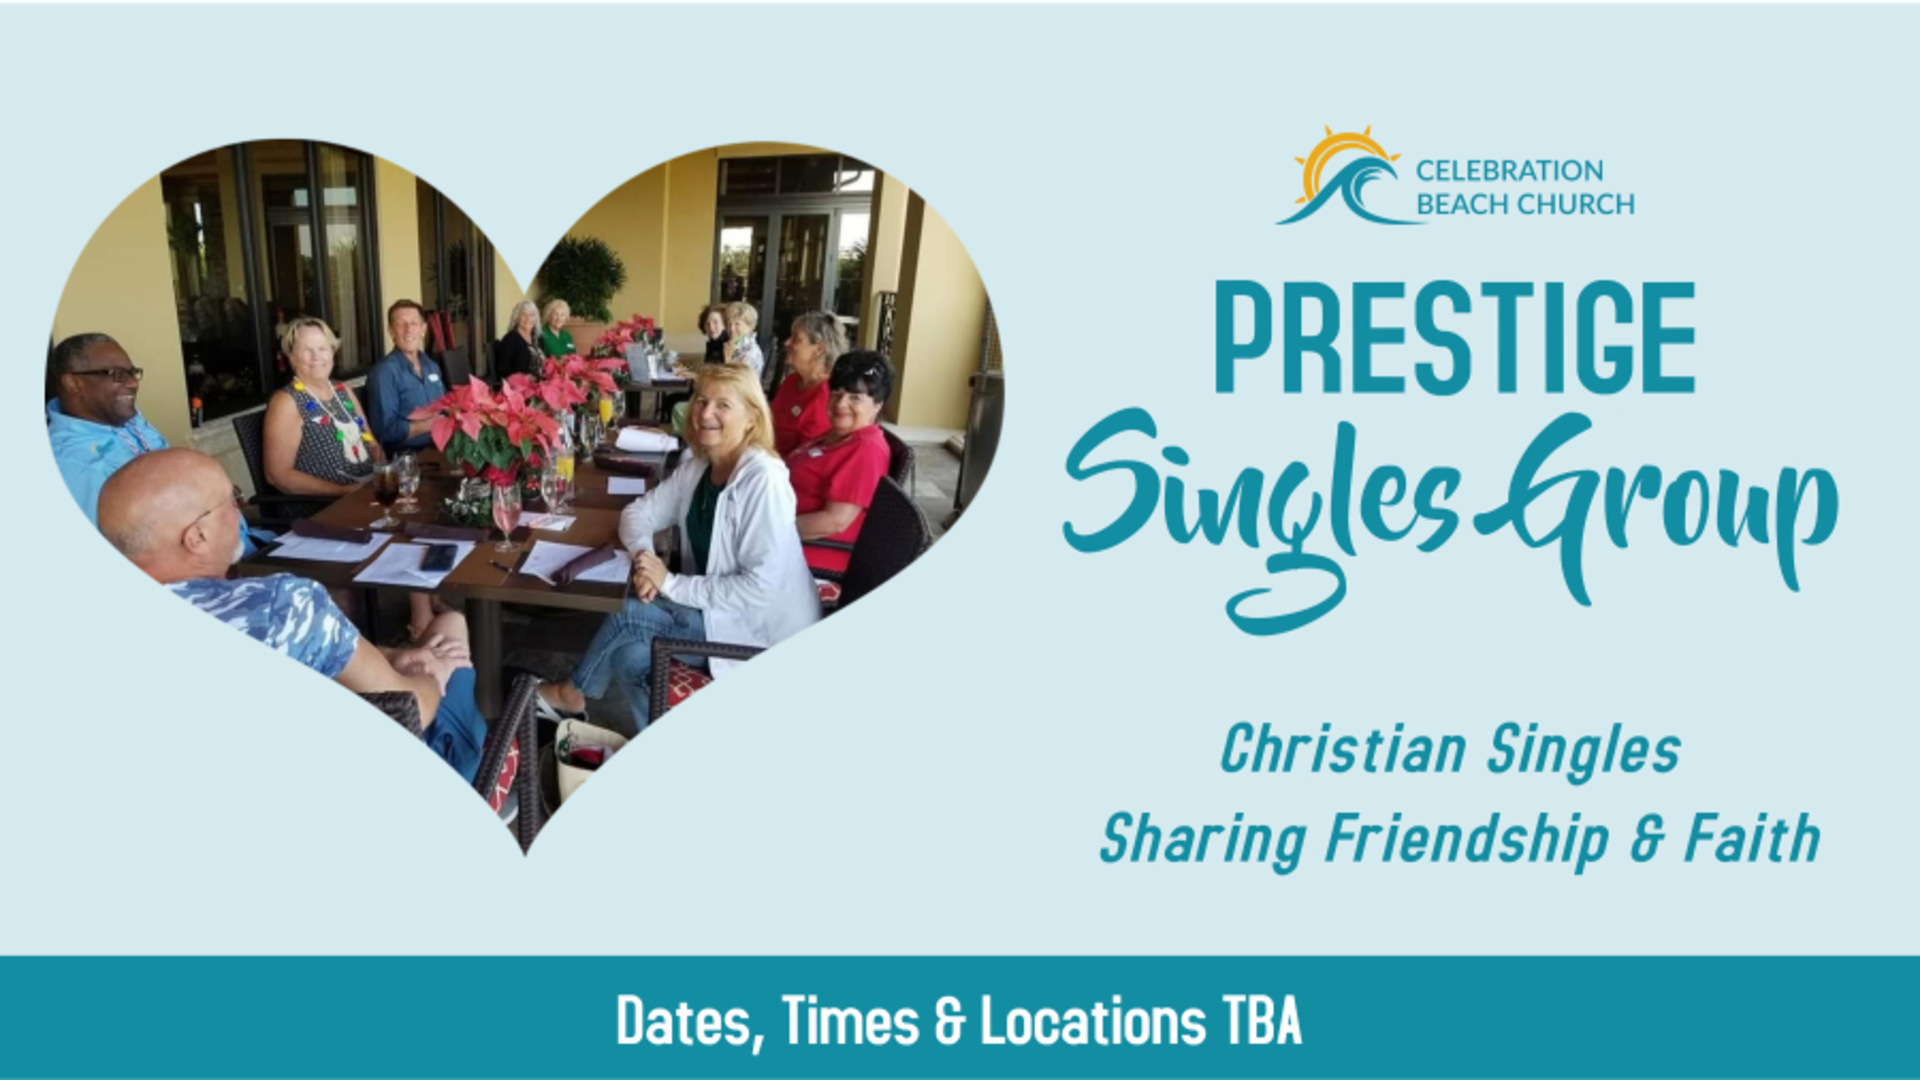 Prestige Singles Celebration Beach Church